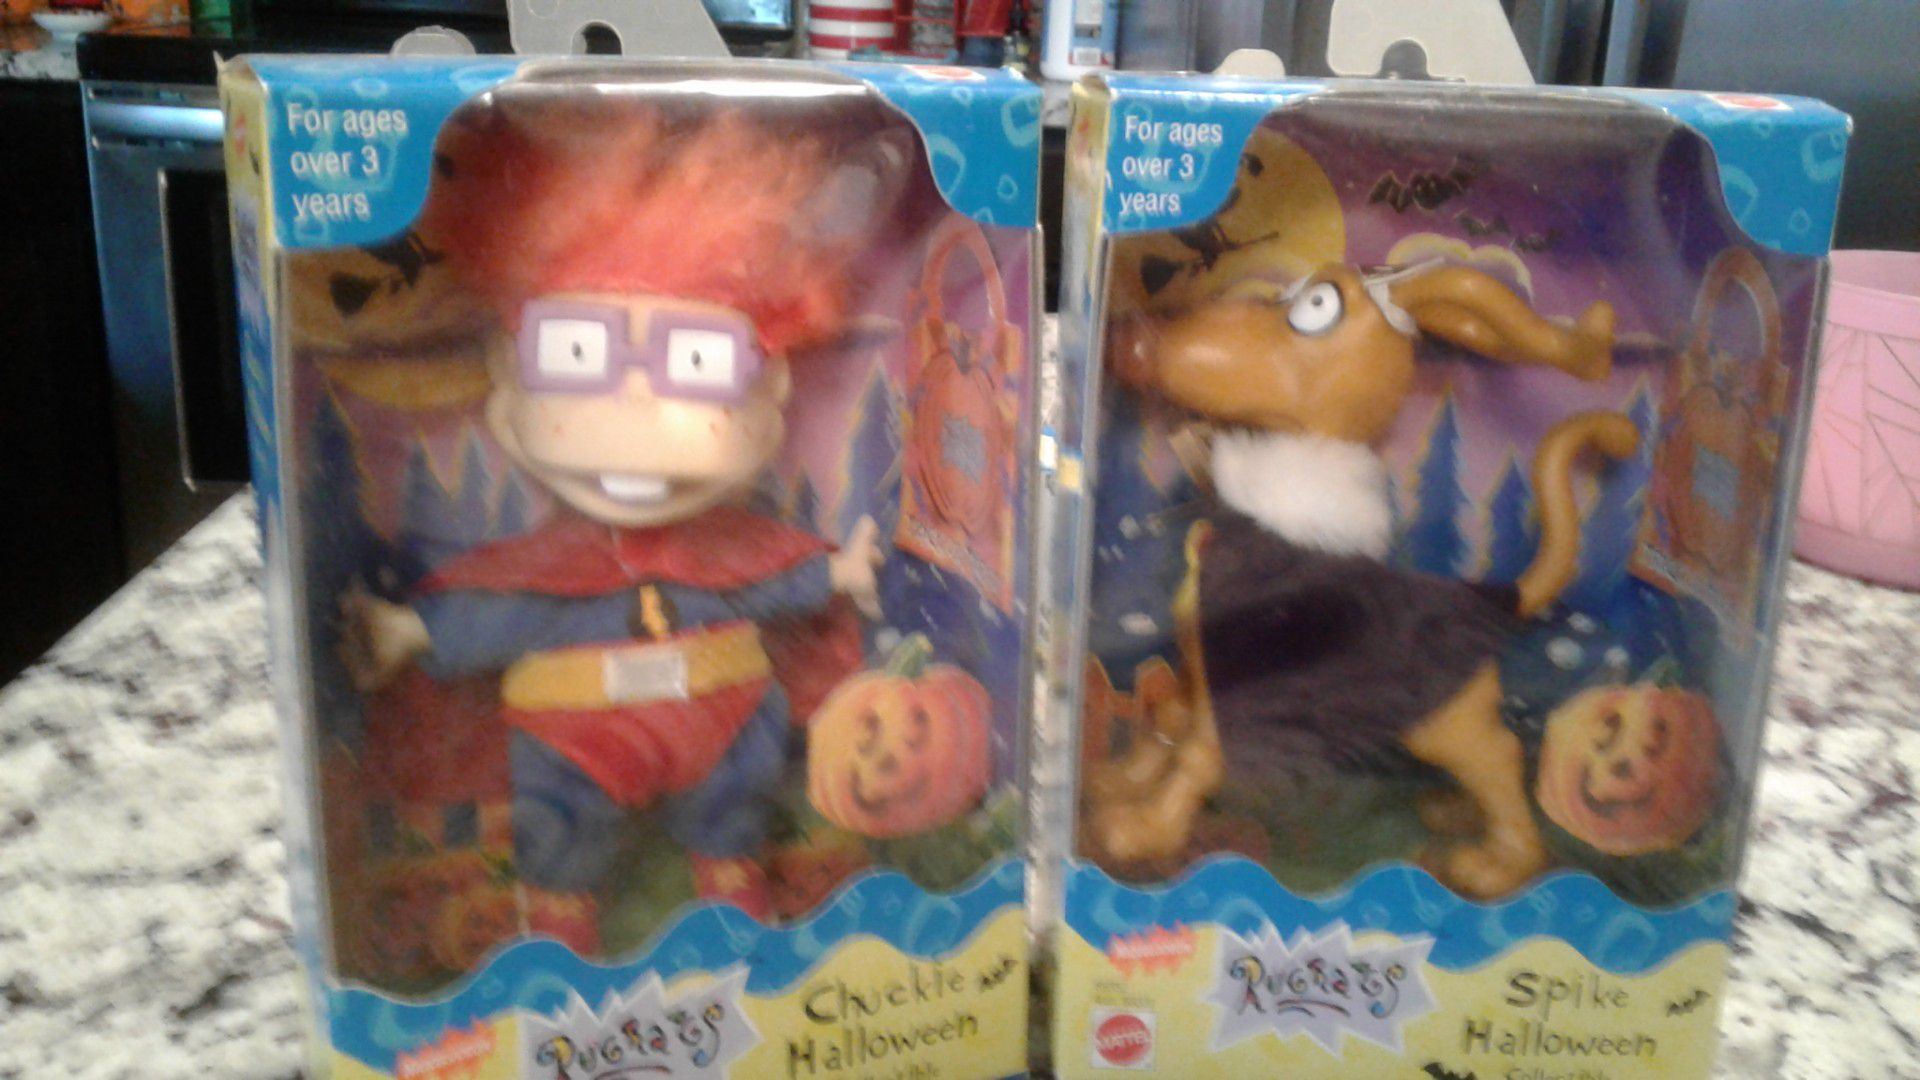 Rugrats Halloween Figures Chuckie and Spike